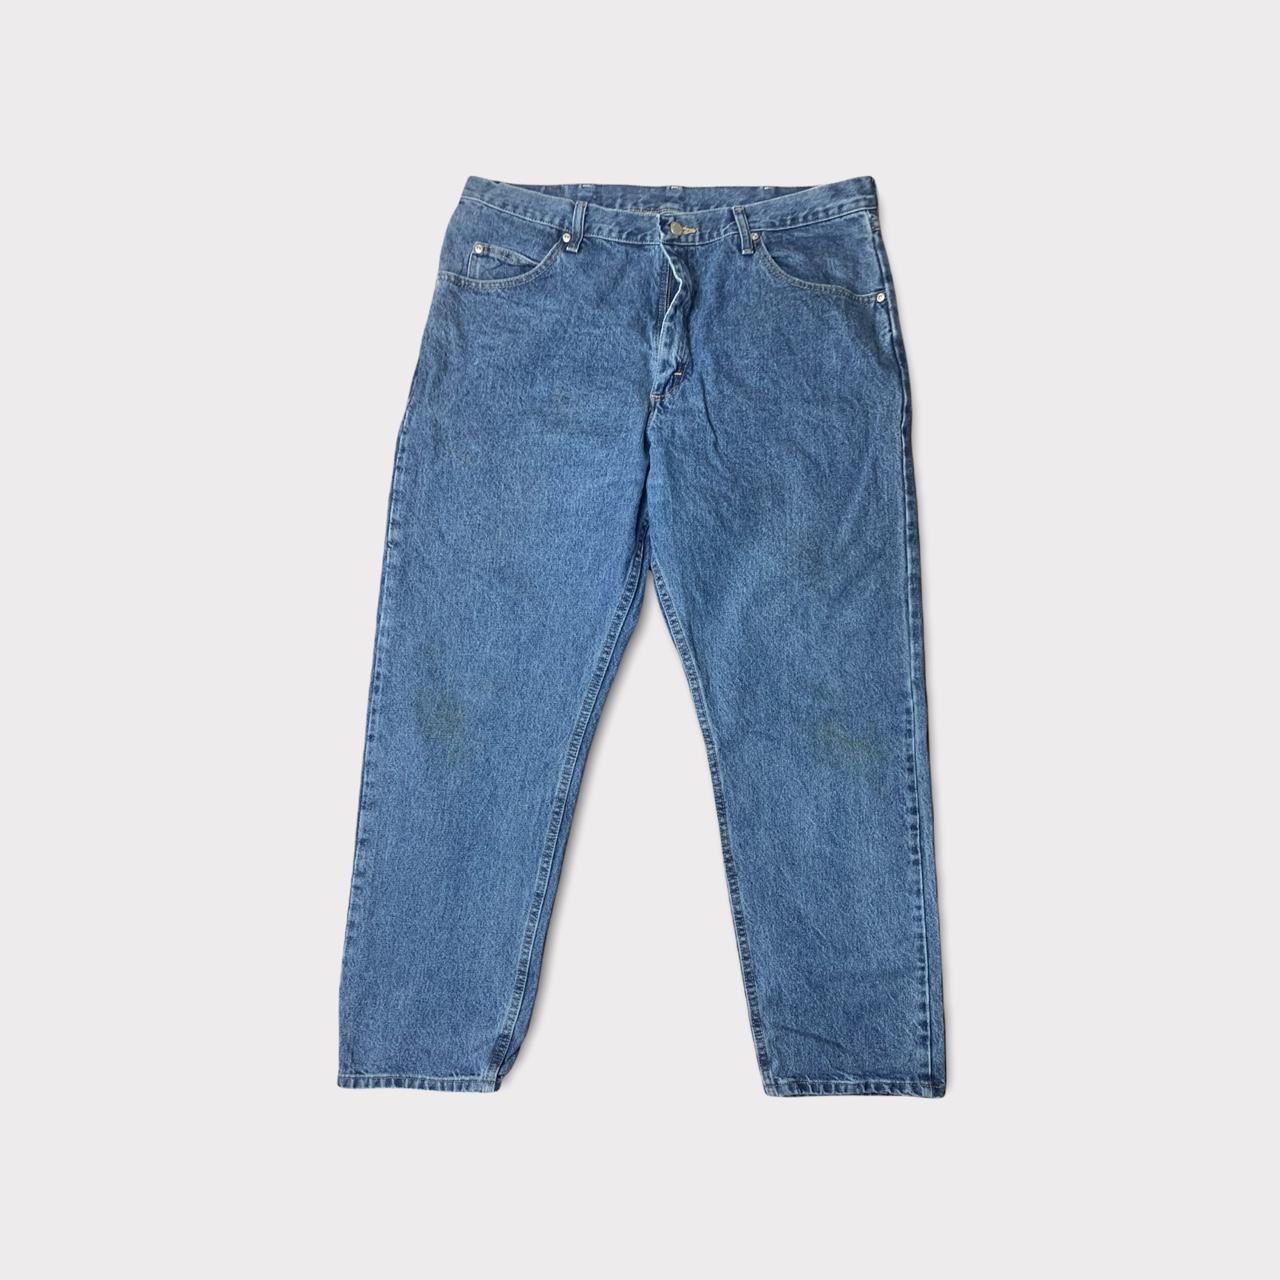 W38 L32 Wrangler Jeans Relaxed Fit Blue Regular... - Depop